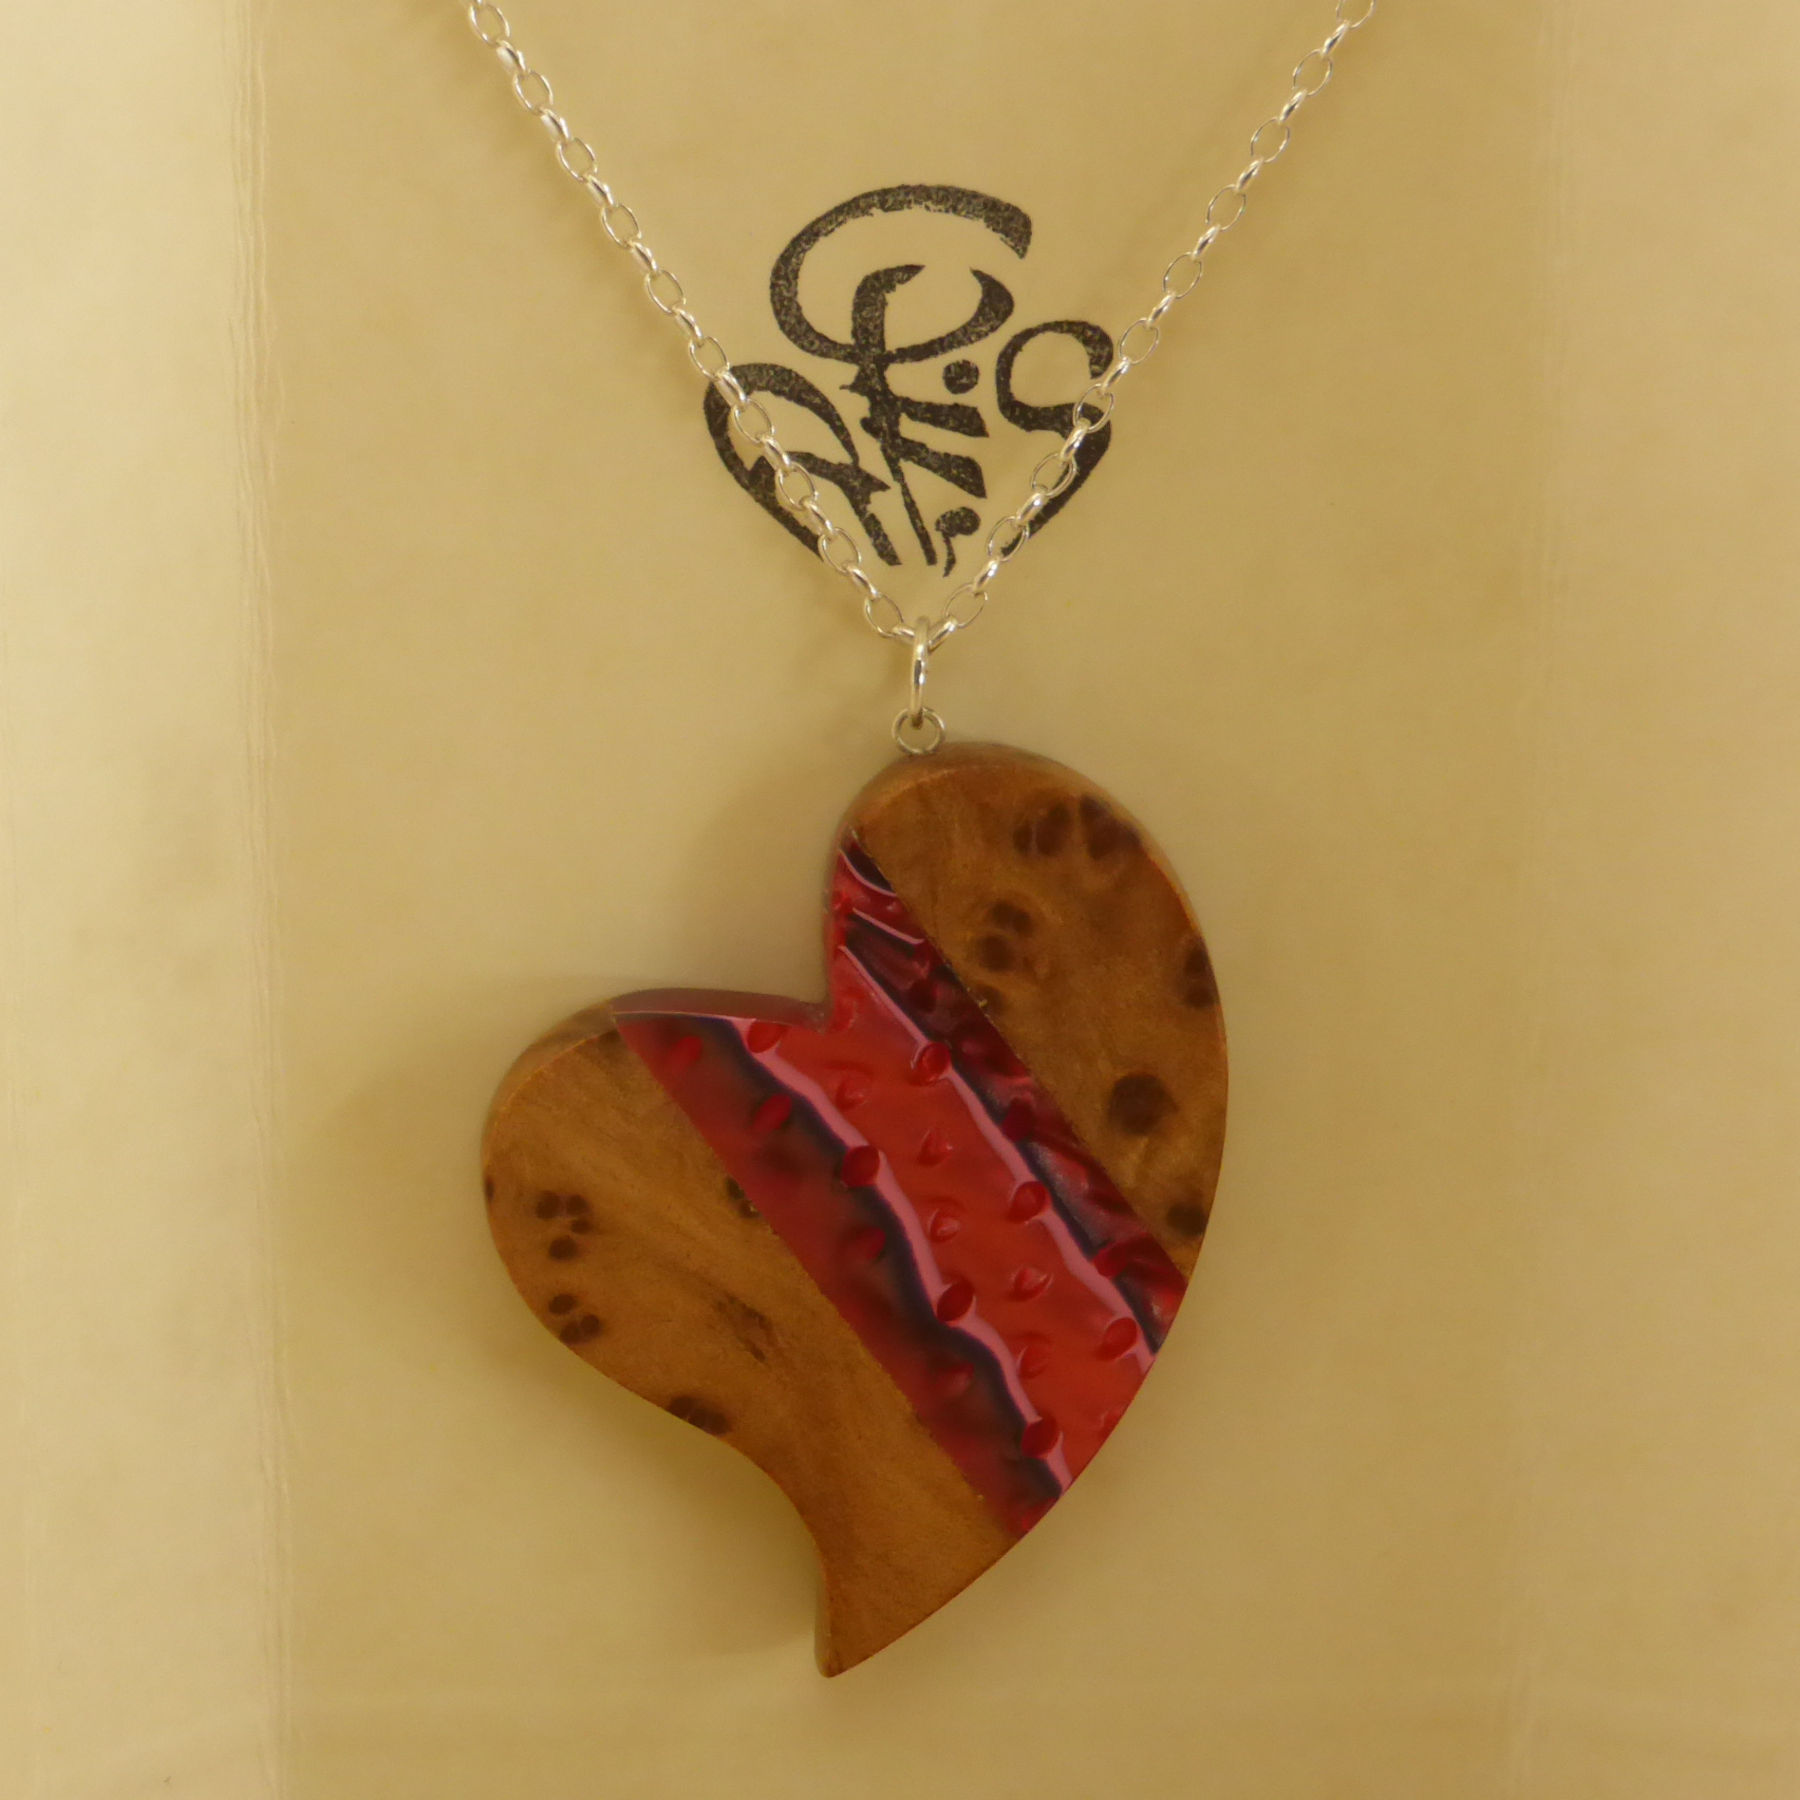 Cedar bramble and acrylic pendant